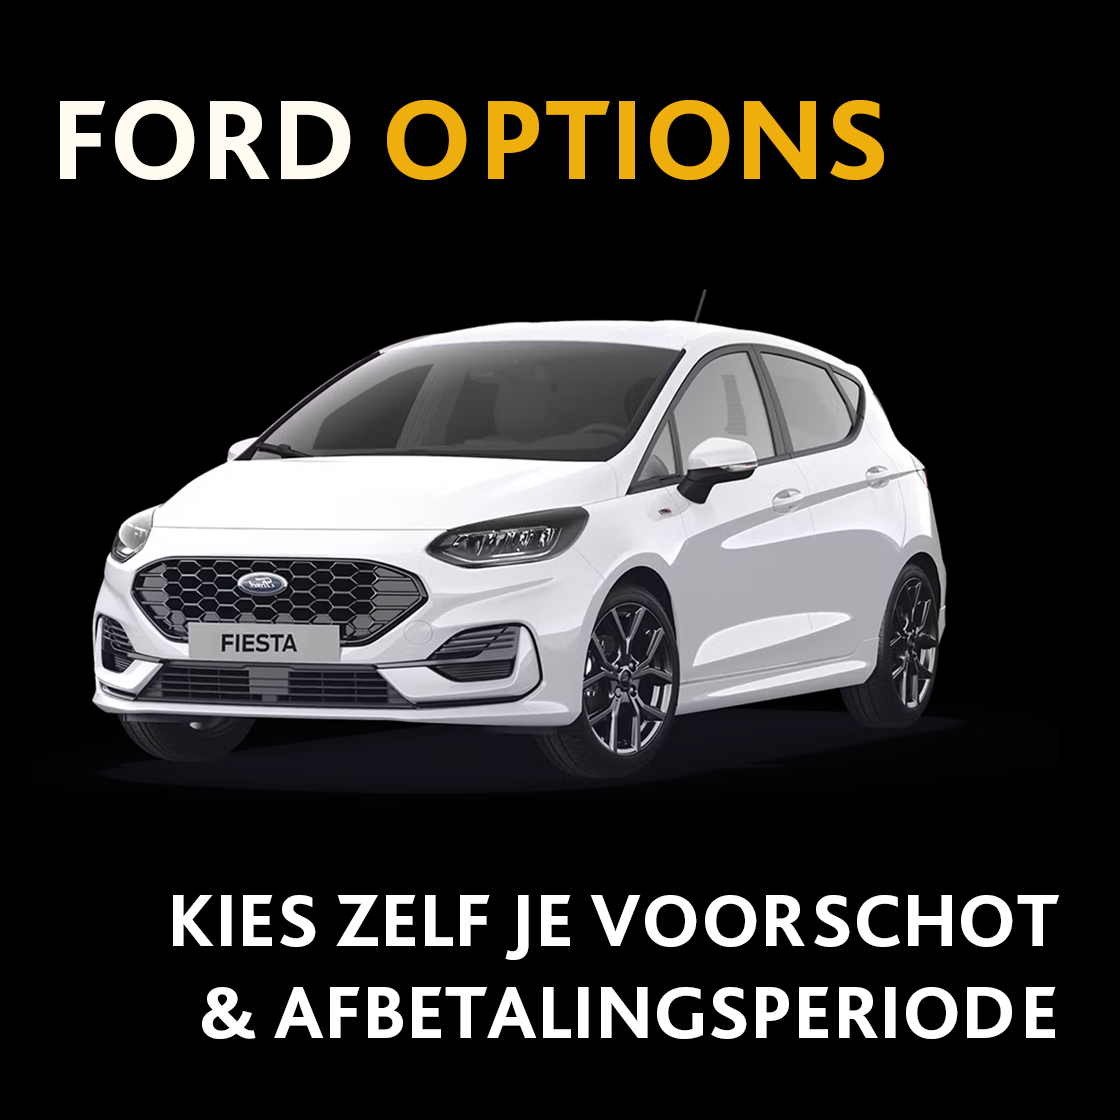 Ford options imageblock 22 v2